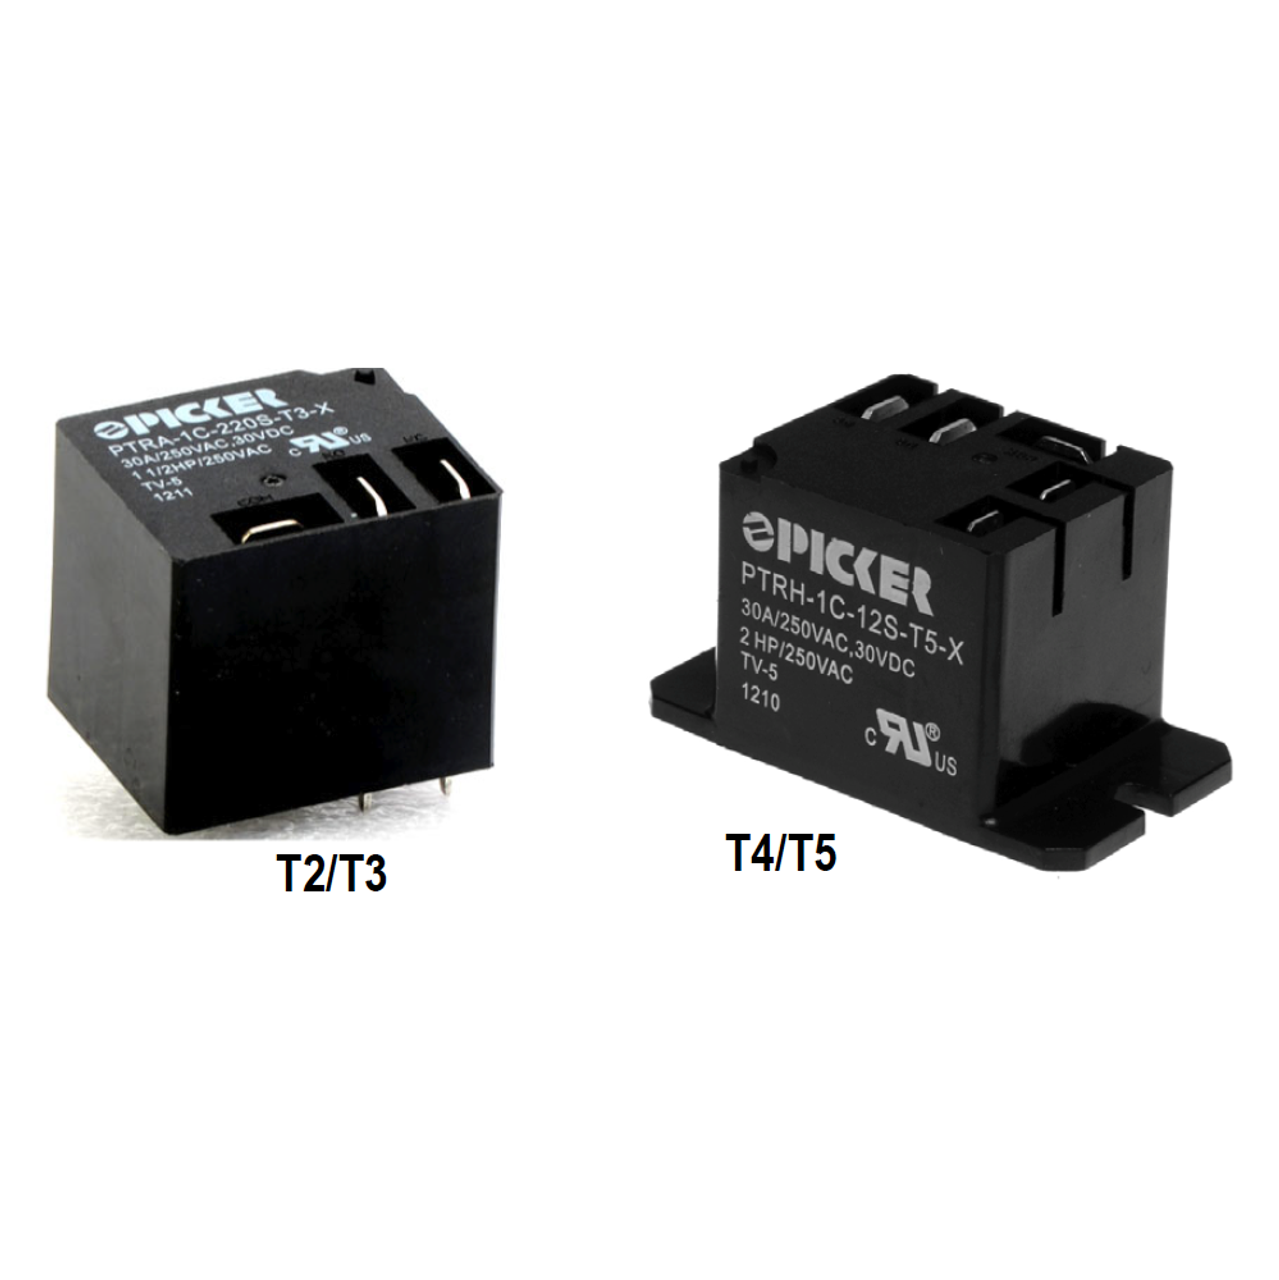 Picker PTRH-1C-110SF-T4-X670.6 Power Relays